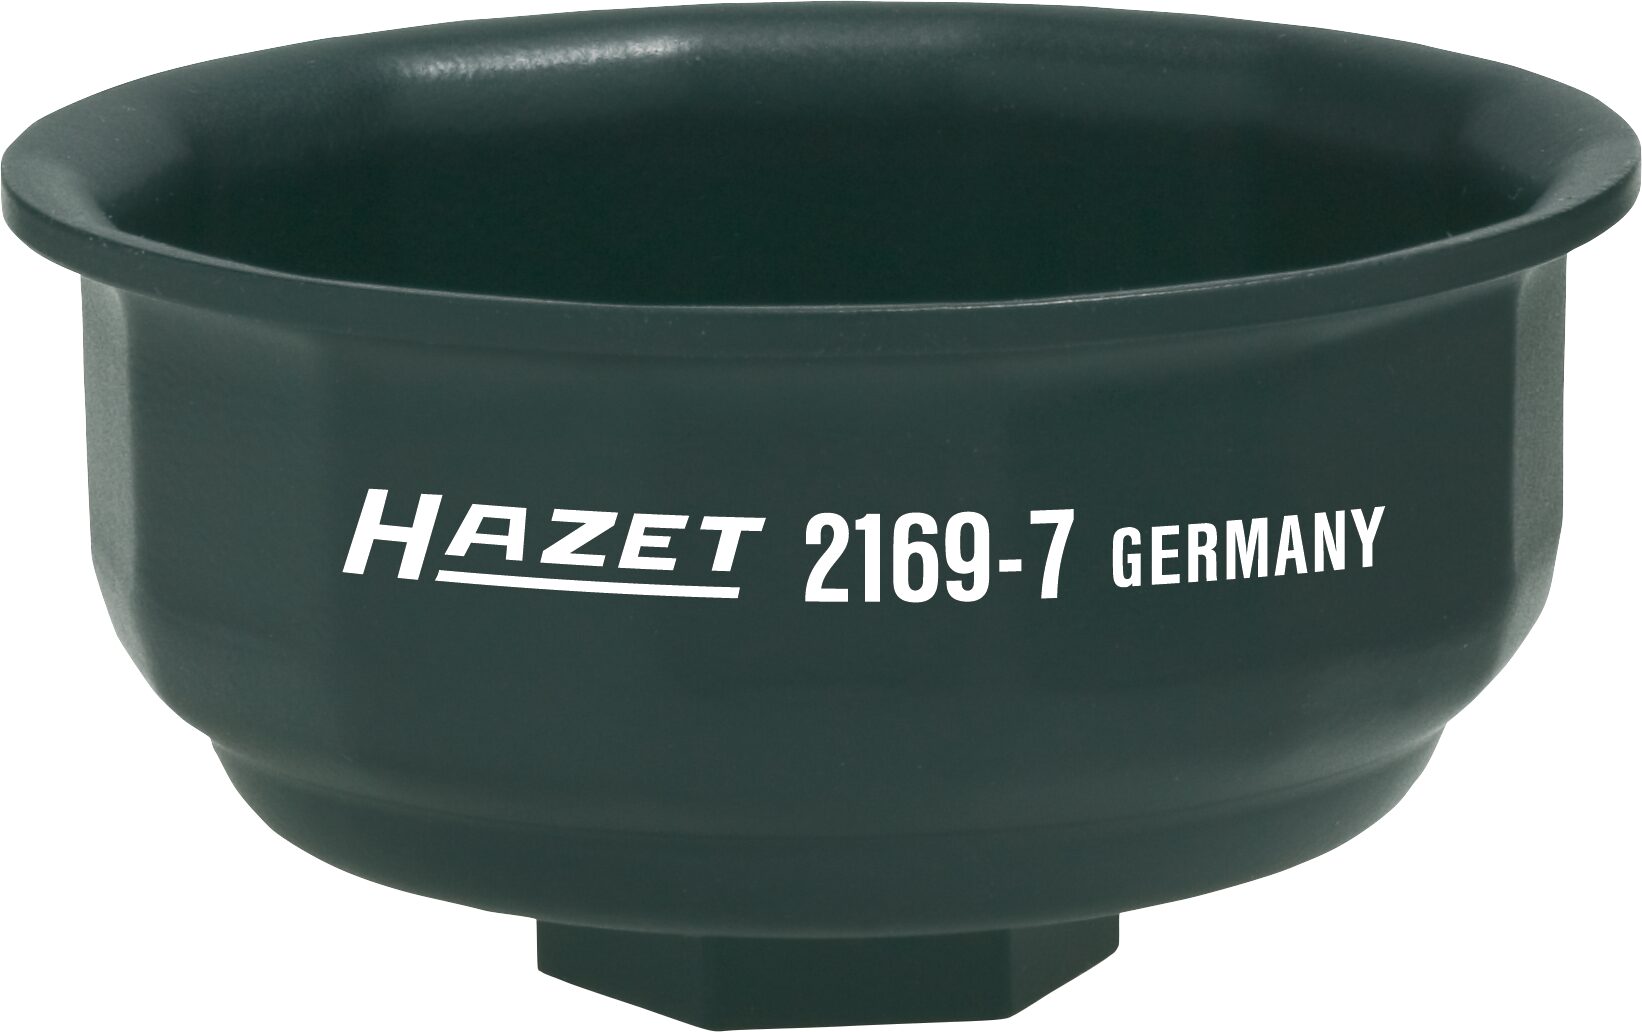 HAZET Ölfilter-Schlüssel 2169-7 · Vierkant hohl 12,5 mm (1/2 Zoll) · Außen 14-kant Profil · 76 mm